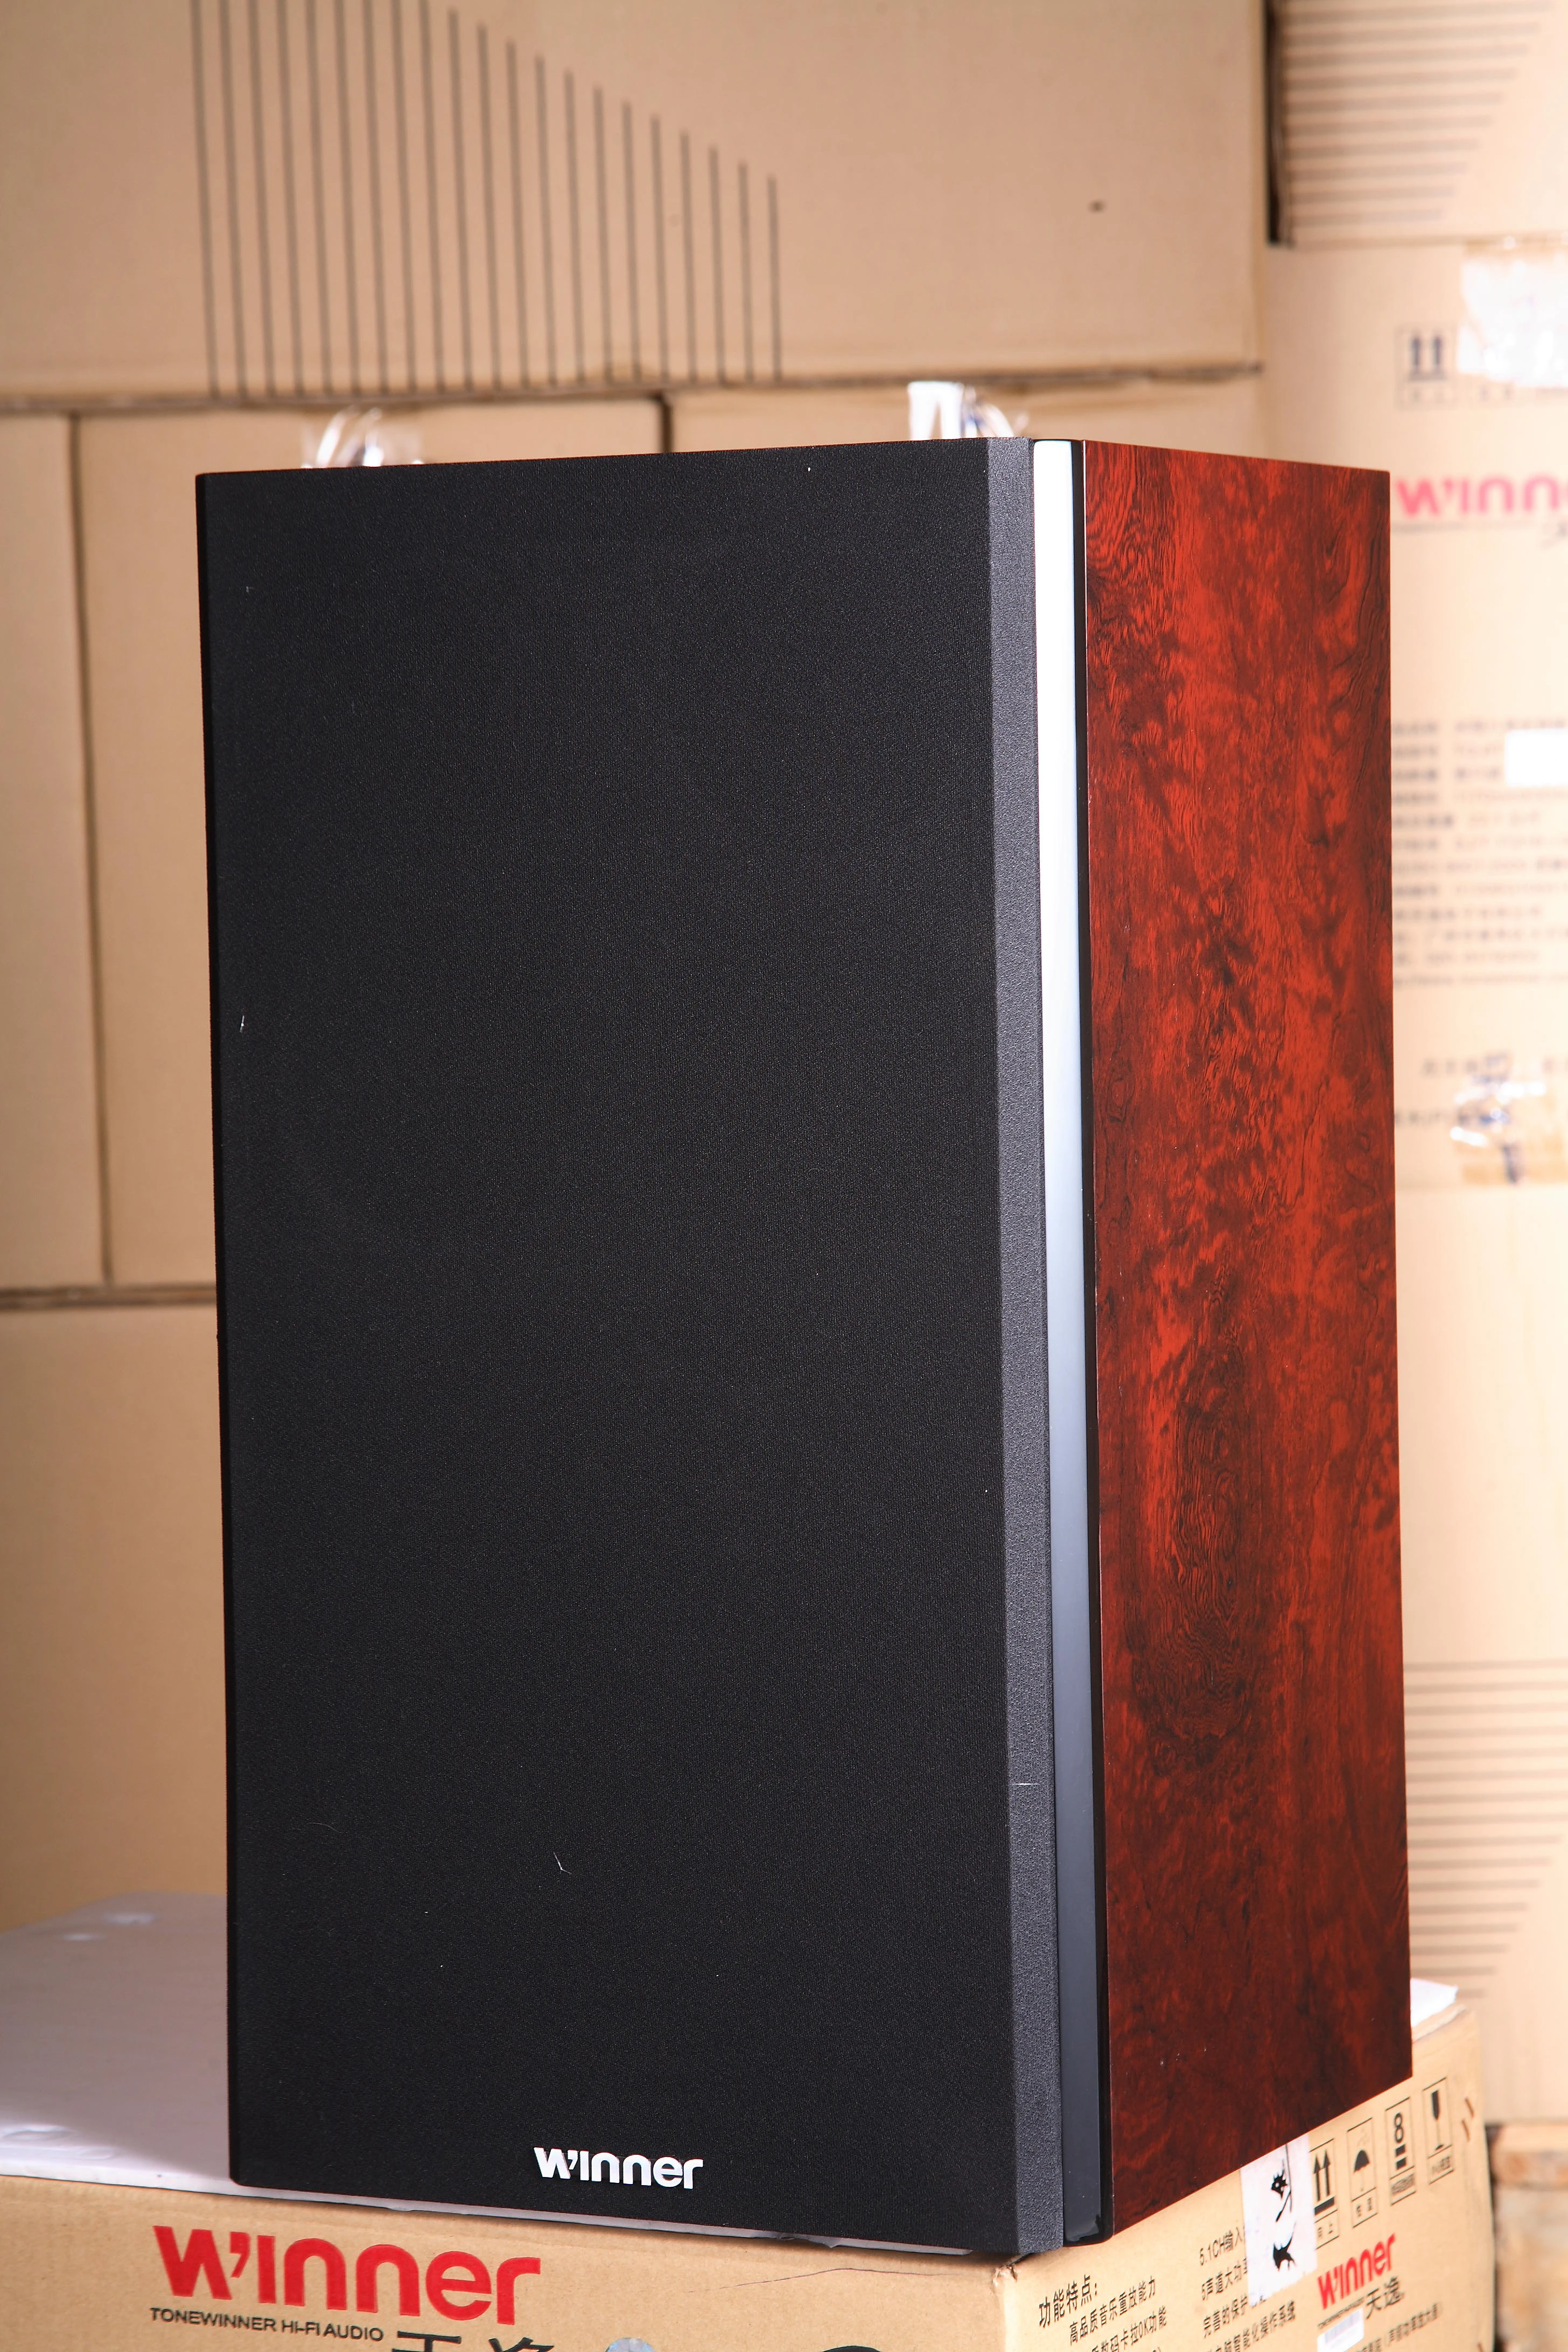 ODM/OEM manufacture Professional 200W HiFi Home Audio Speakers System ktv speaker system professional audio, video